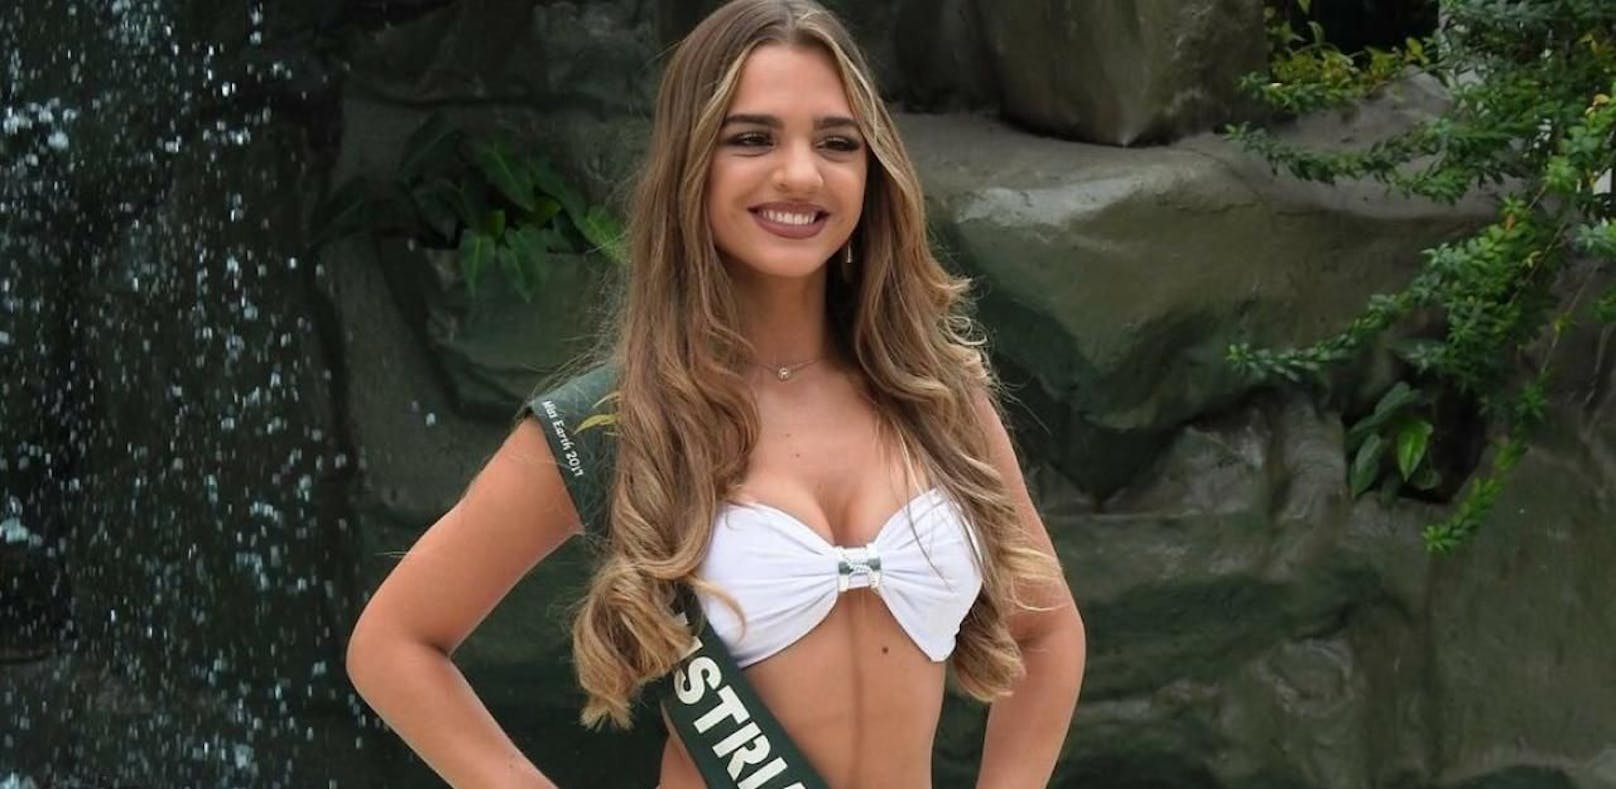 Bianca verpasste Einzug ins Miss Earth-Finale